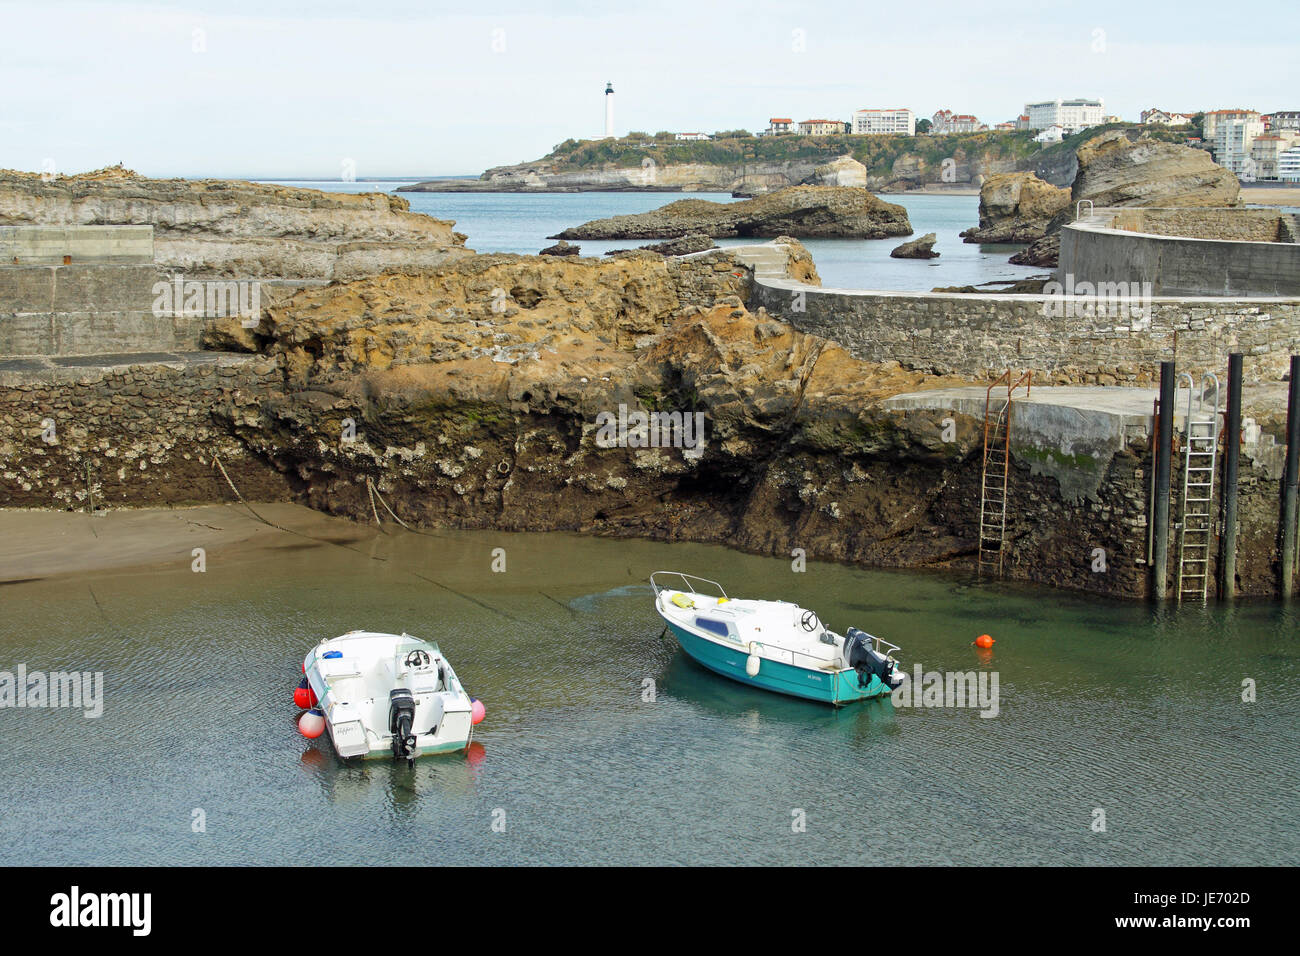 Port des Pecheurs fishing port, Biarritz, France Stock Photo